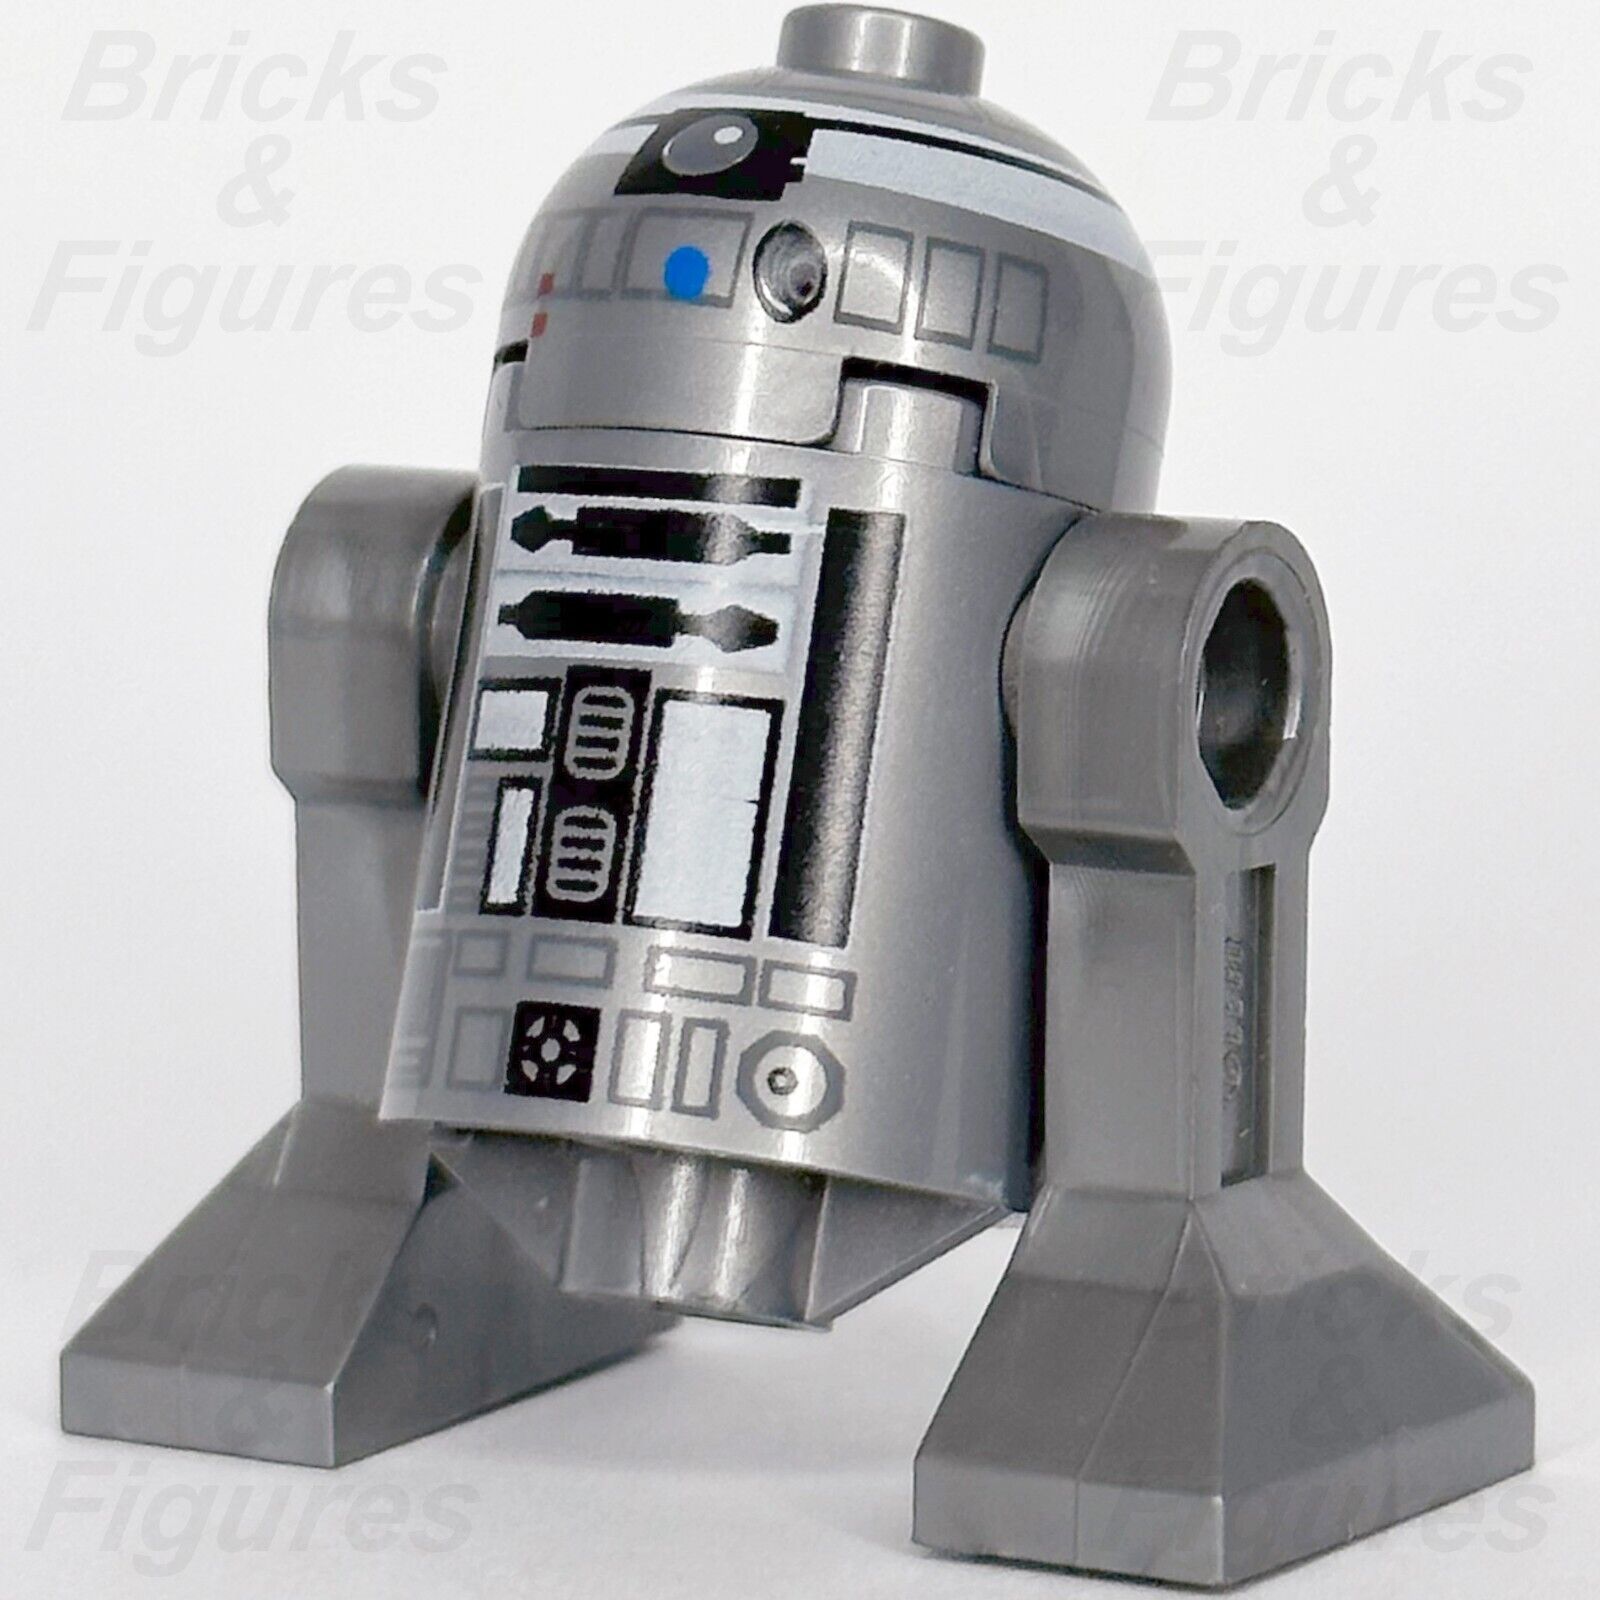 LEGO Star Wars R2-Q2 Astromech Droid Minifigure Legends 7915 sw0303 Minifig